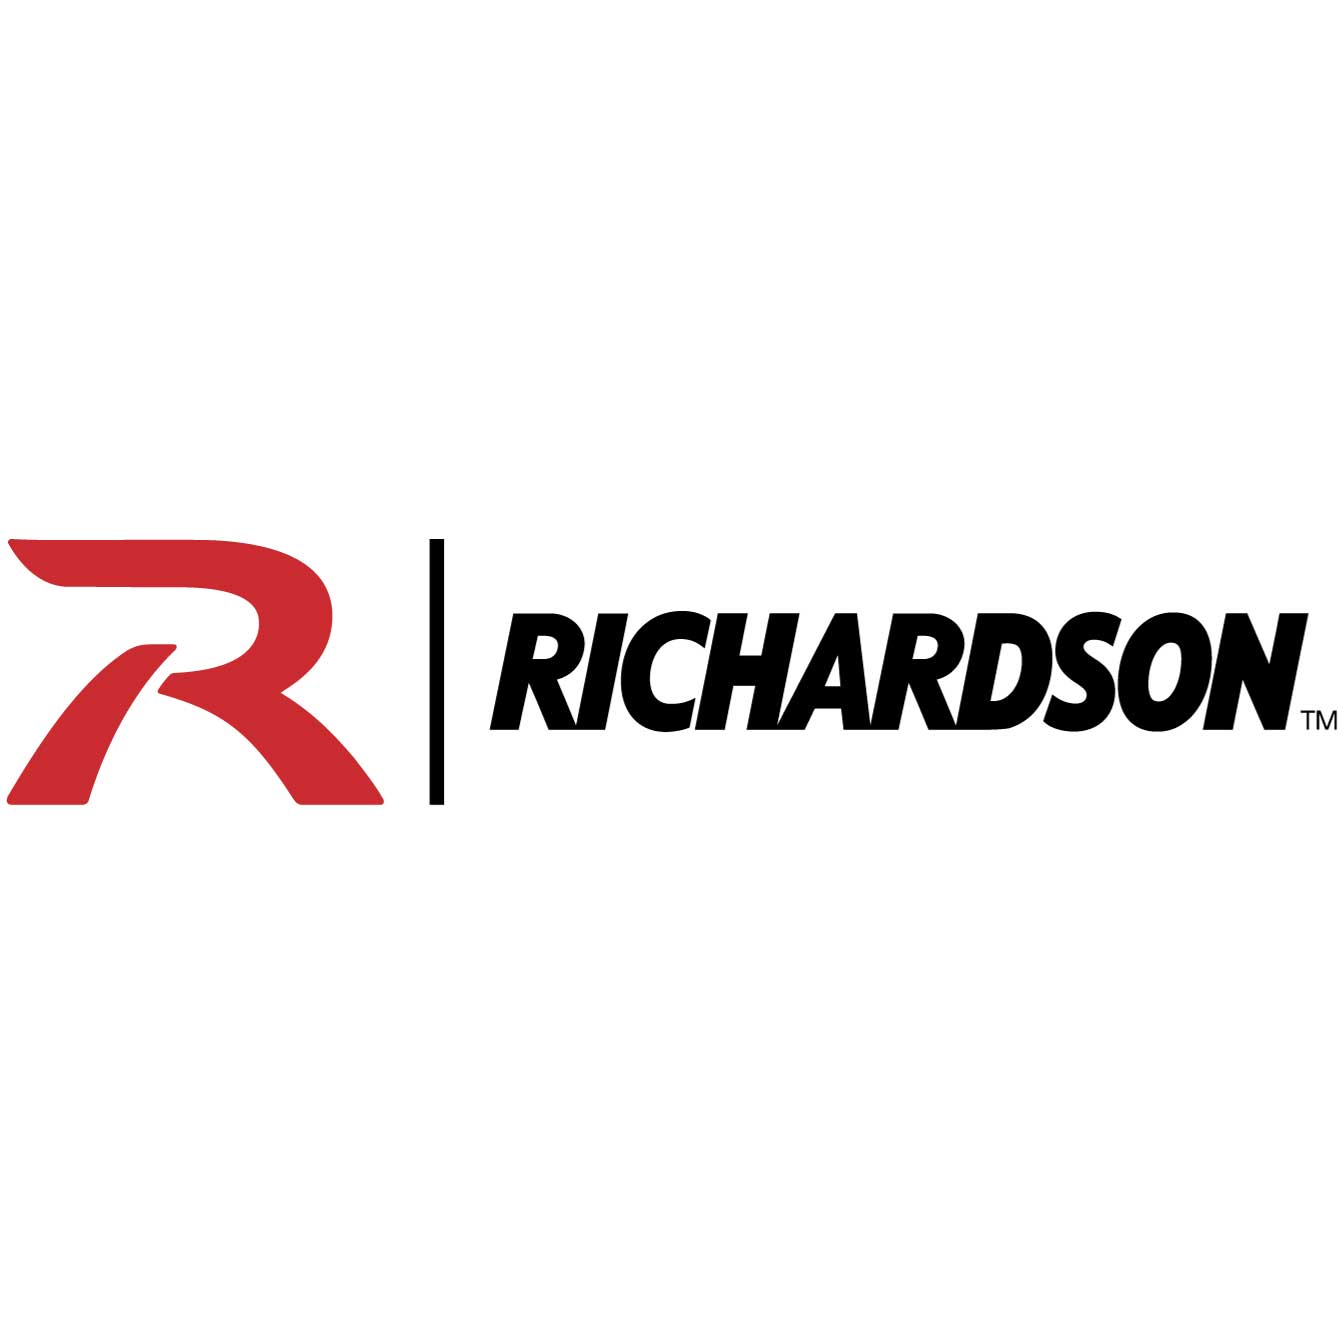 RICHARDSON-CAP2.jpg